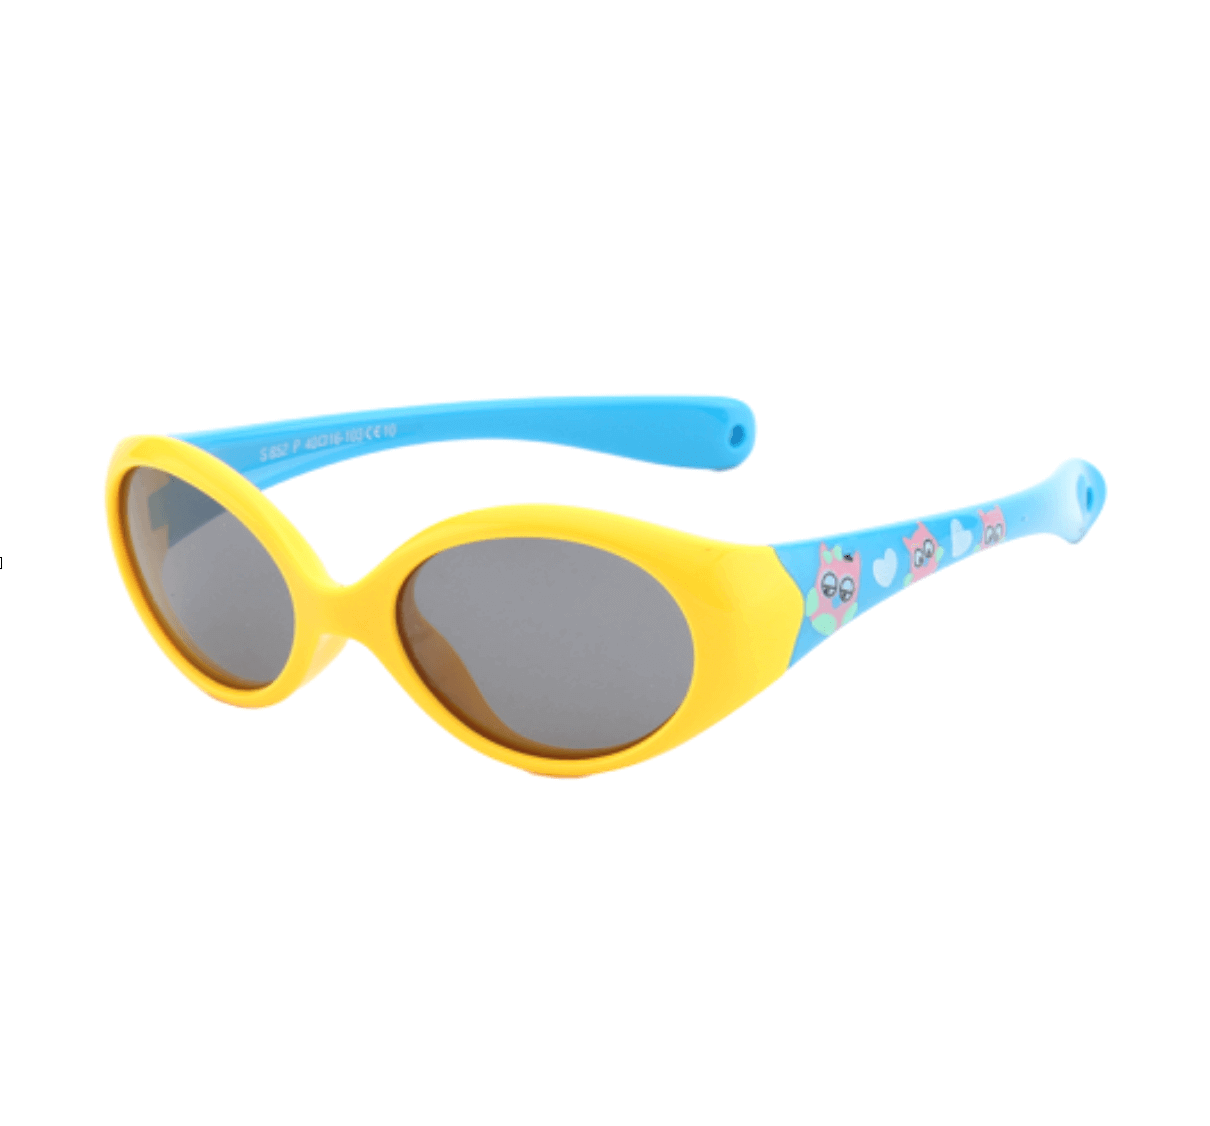 Sunglasses Supplier - China Sunglasses Manufacturer_Kids Polarized Sunglasses